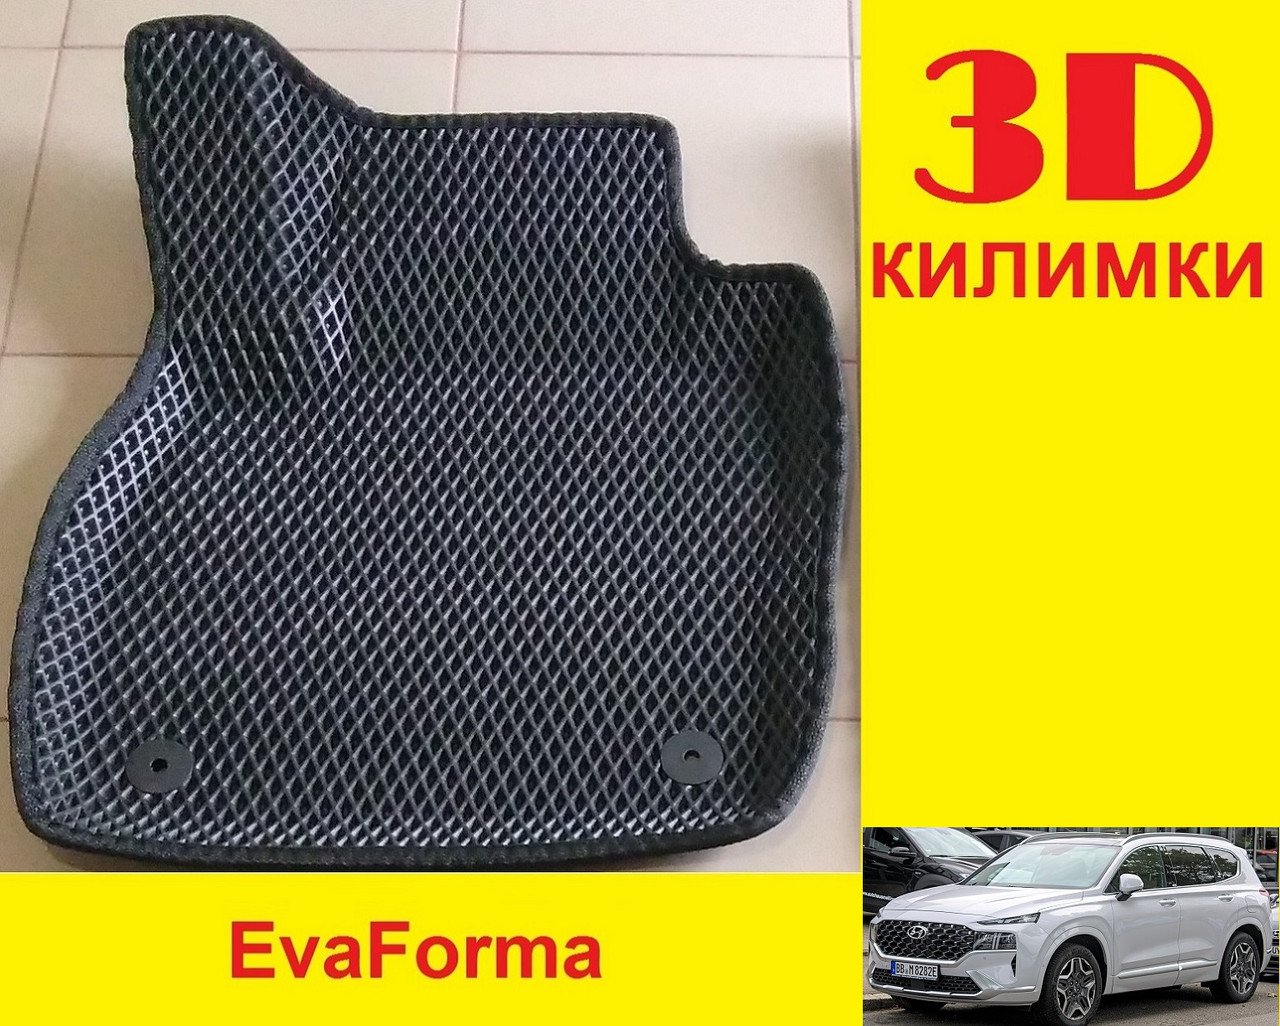 3D килимки EvaForma на Hyundai Santa Fe '21-23 TM, килимки ЕВА